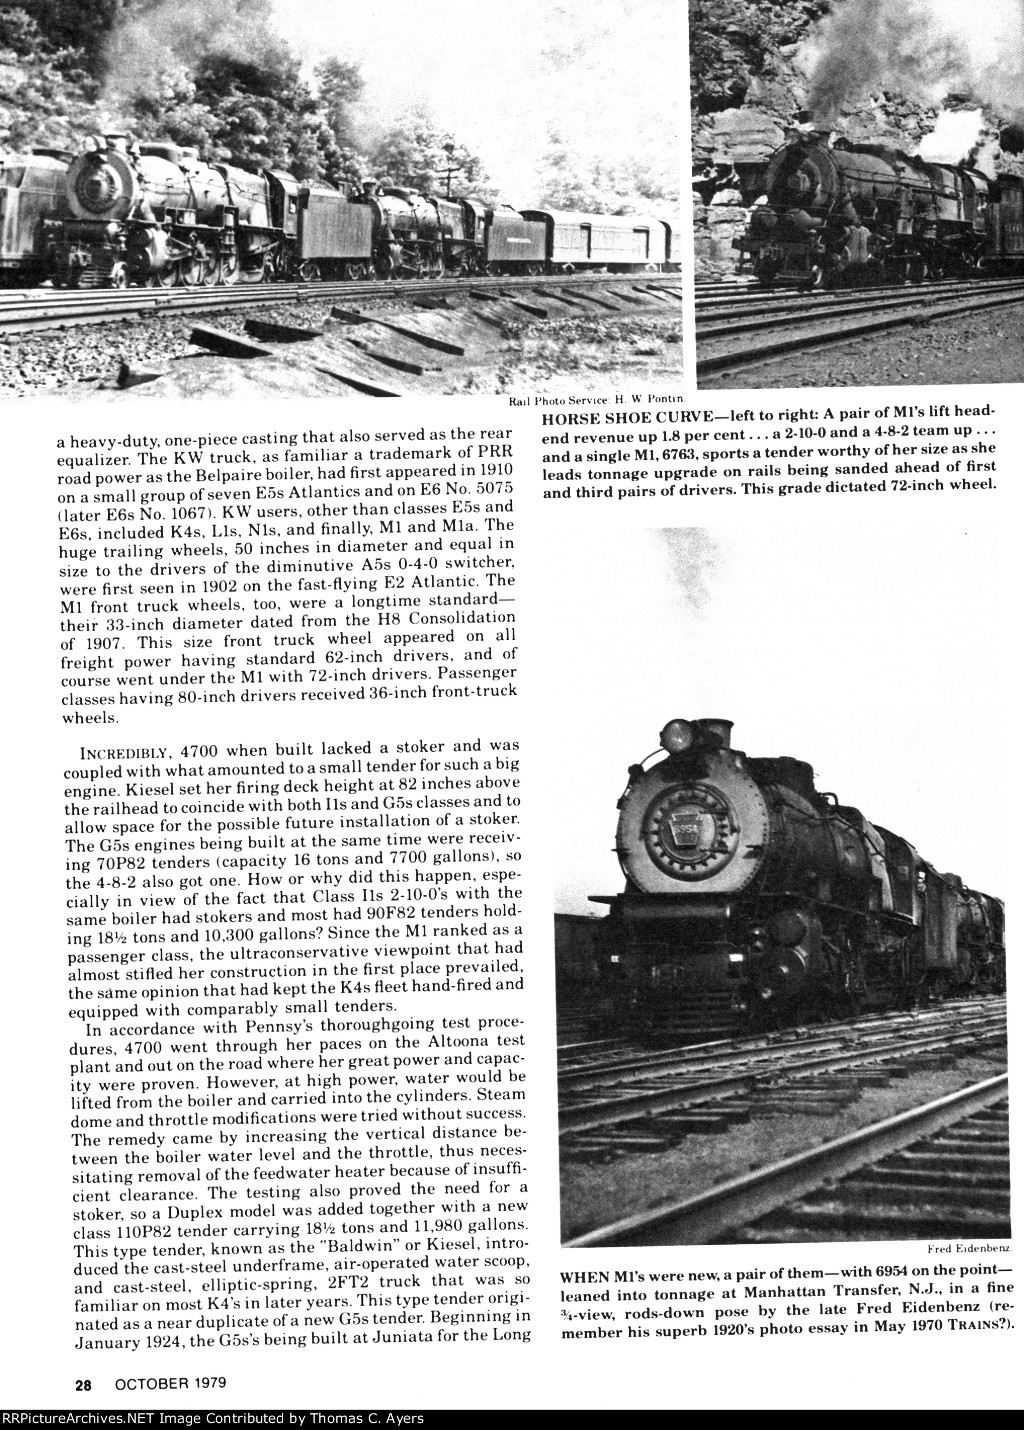 Atterbury's M-1 Engines, Page 28, 1979